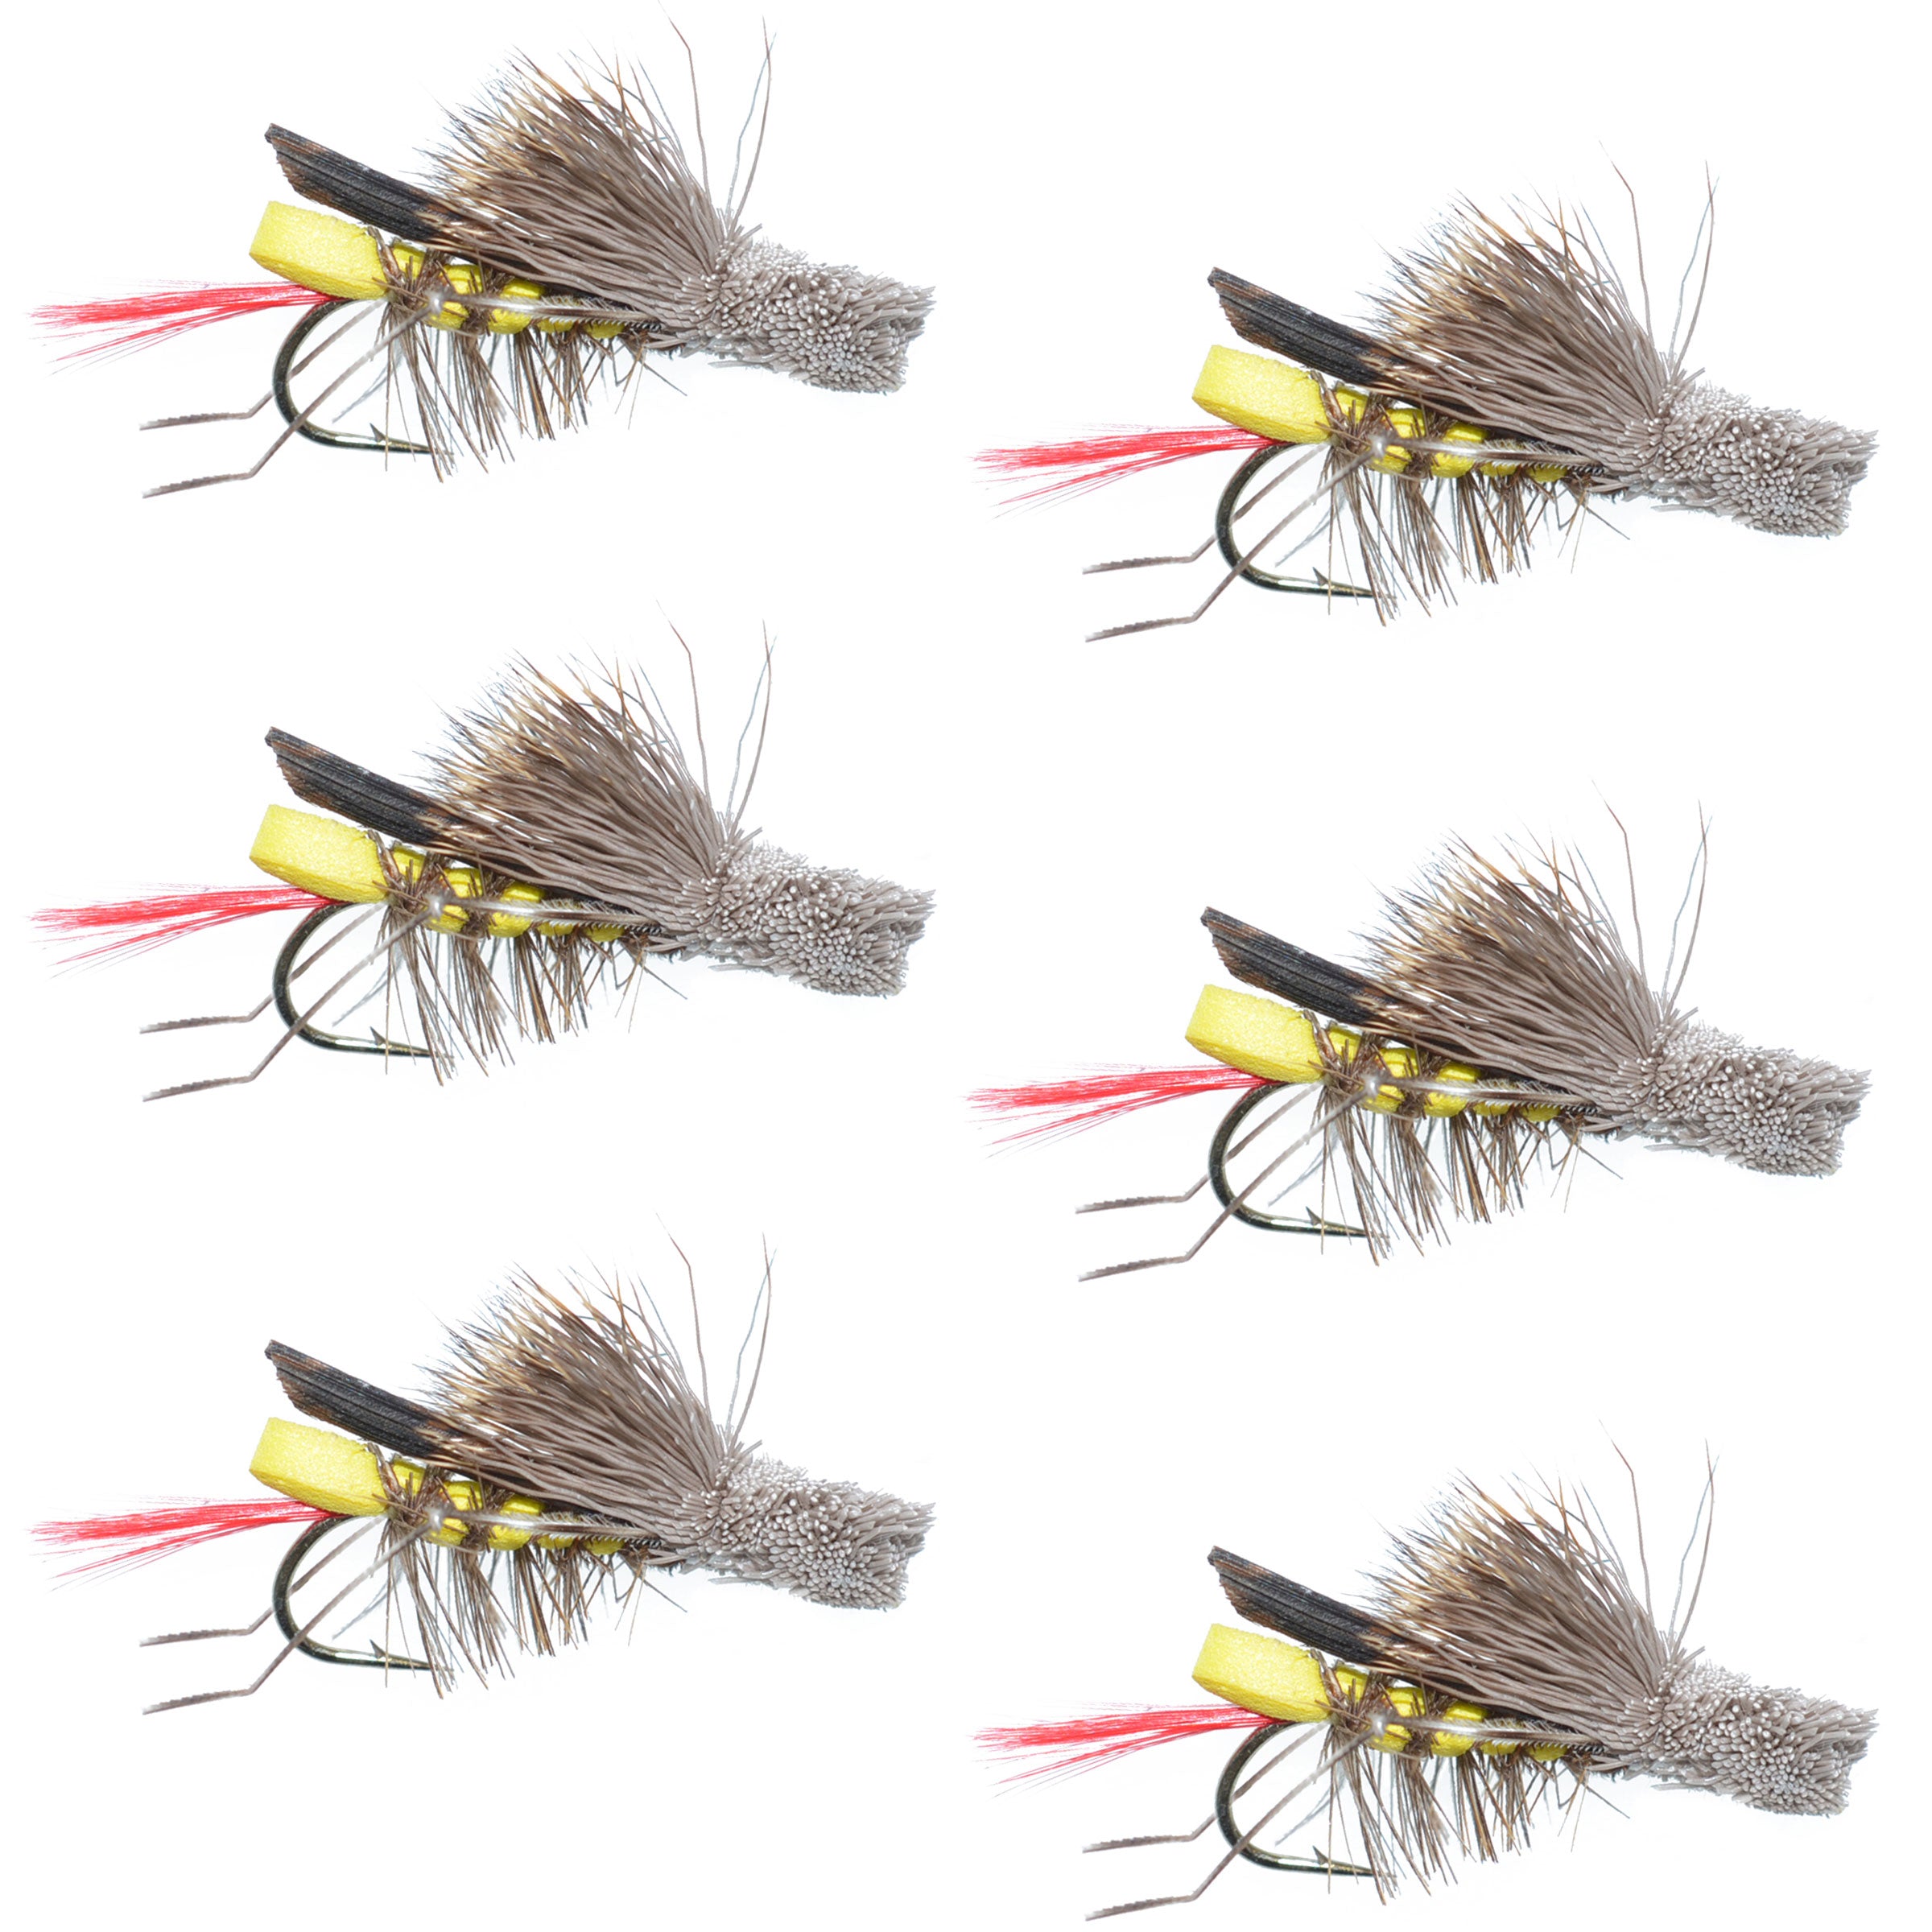 Dave's Hopper Yellow Foam Body Grasshopper Fly - 6 Flies Hook Size 12